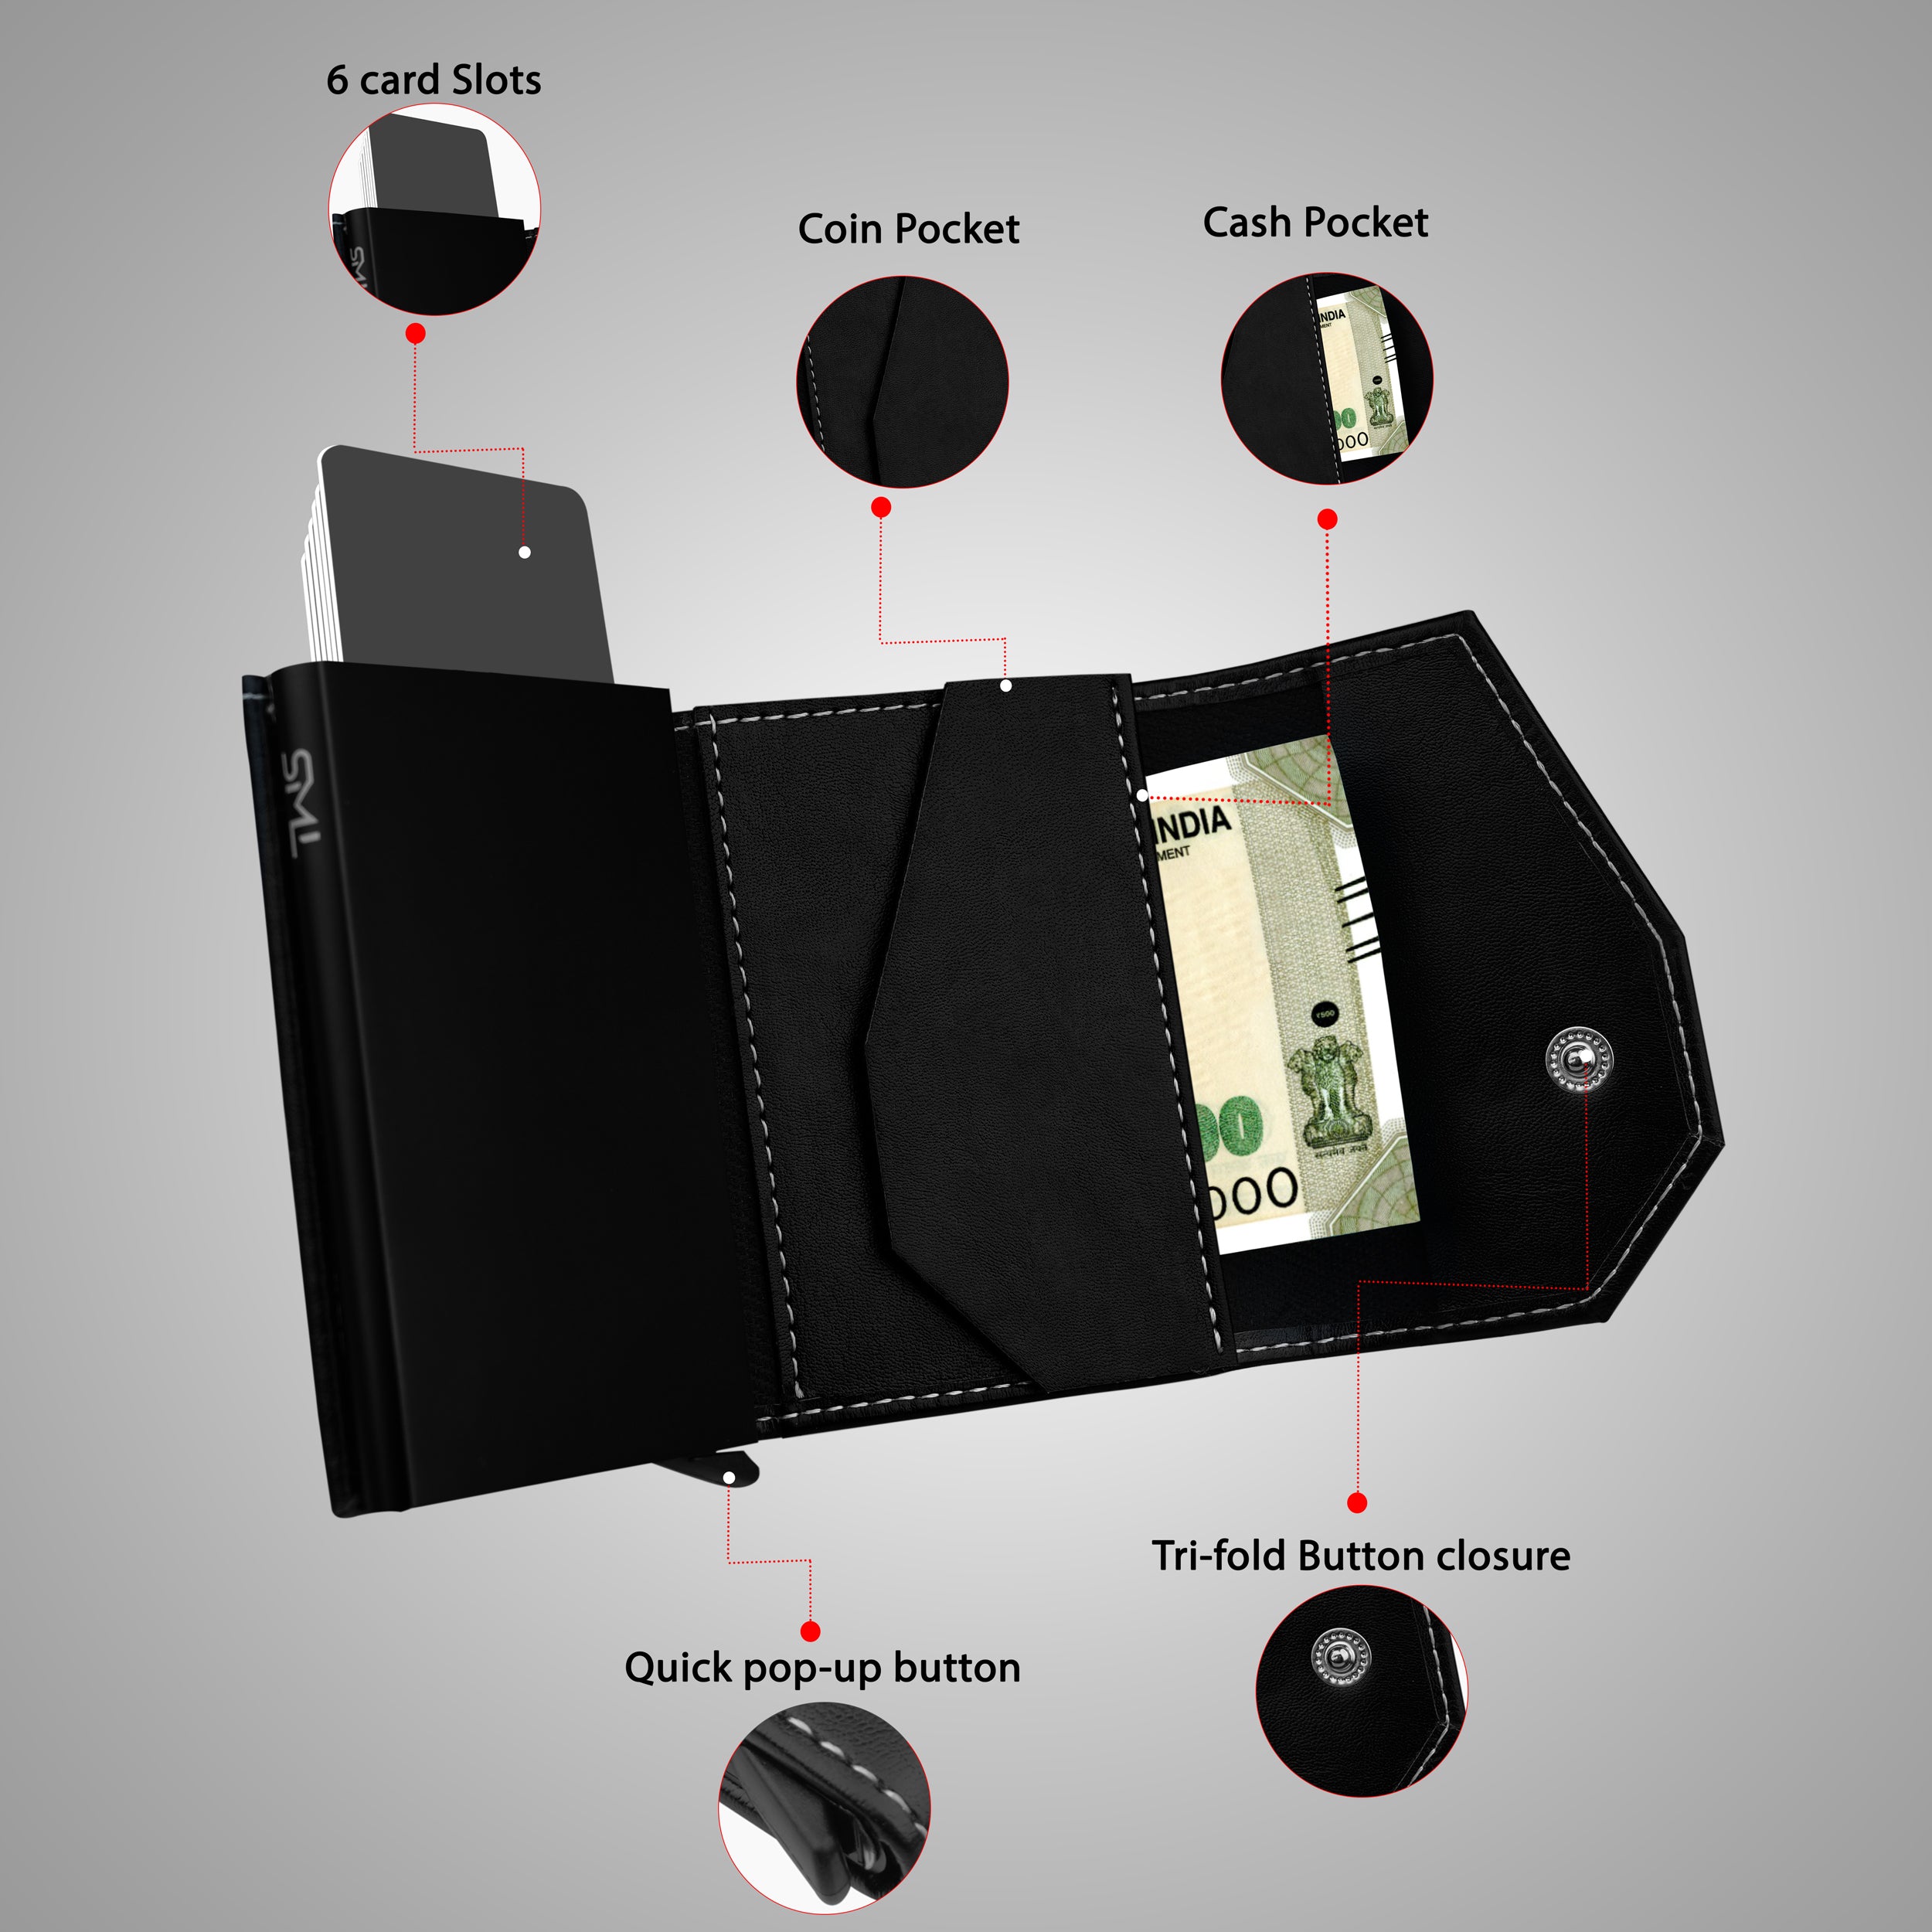 Vintage RFID Protected Wallet Card Holder - Black